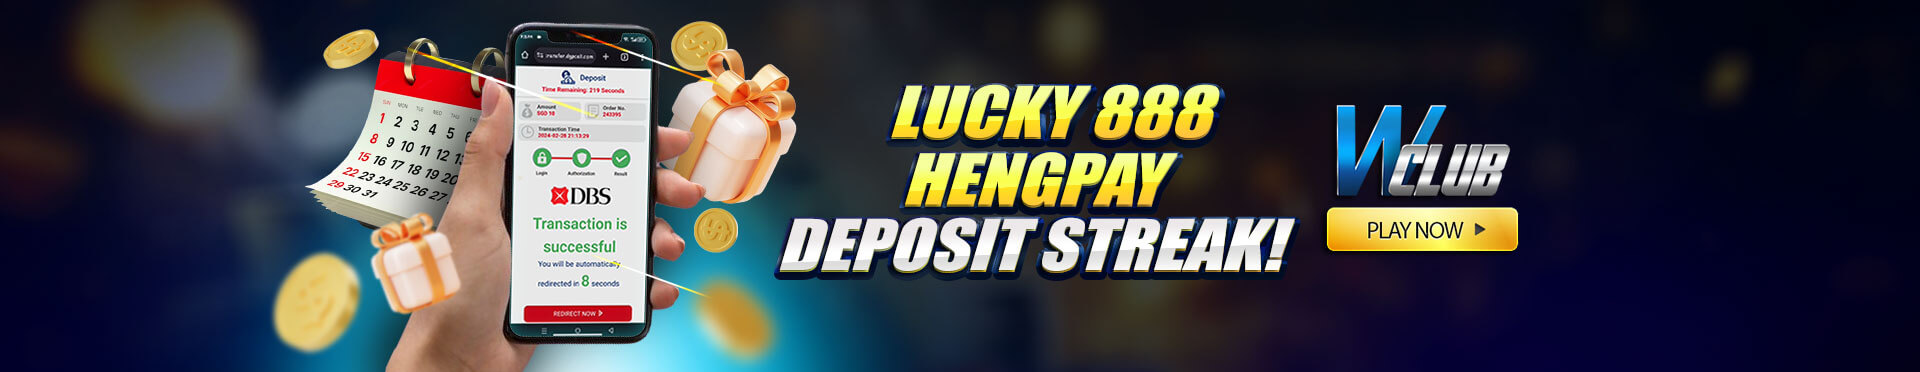 Lucky 888 HengPay Deposit Streak